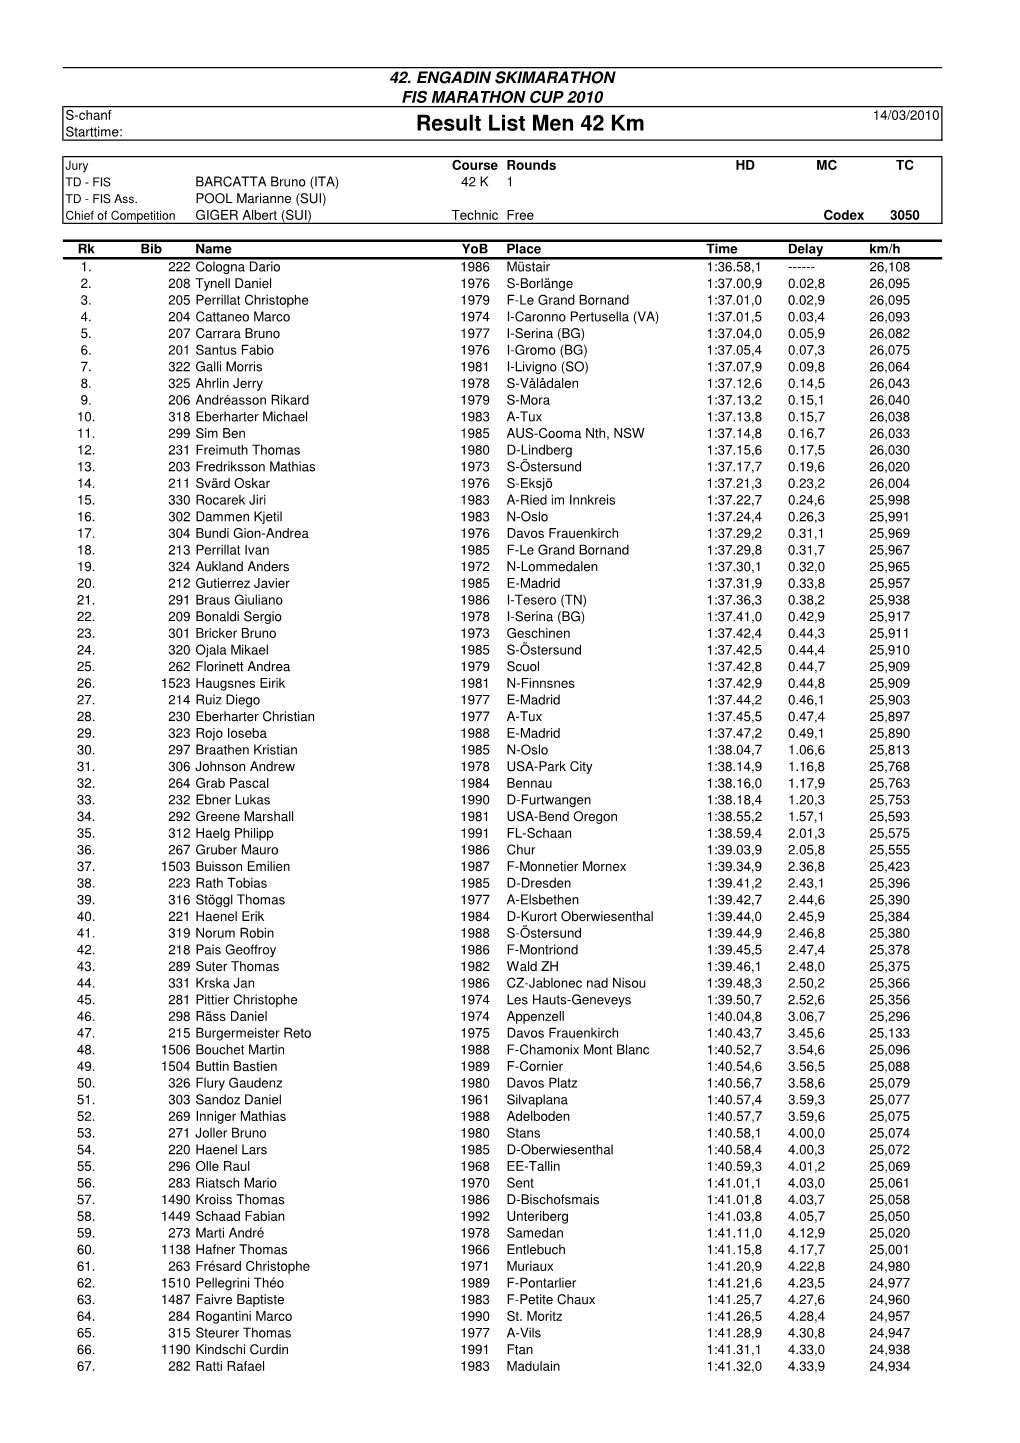 Result List Men 42 Km